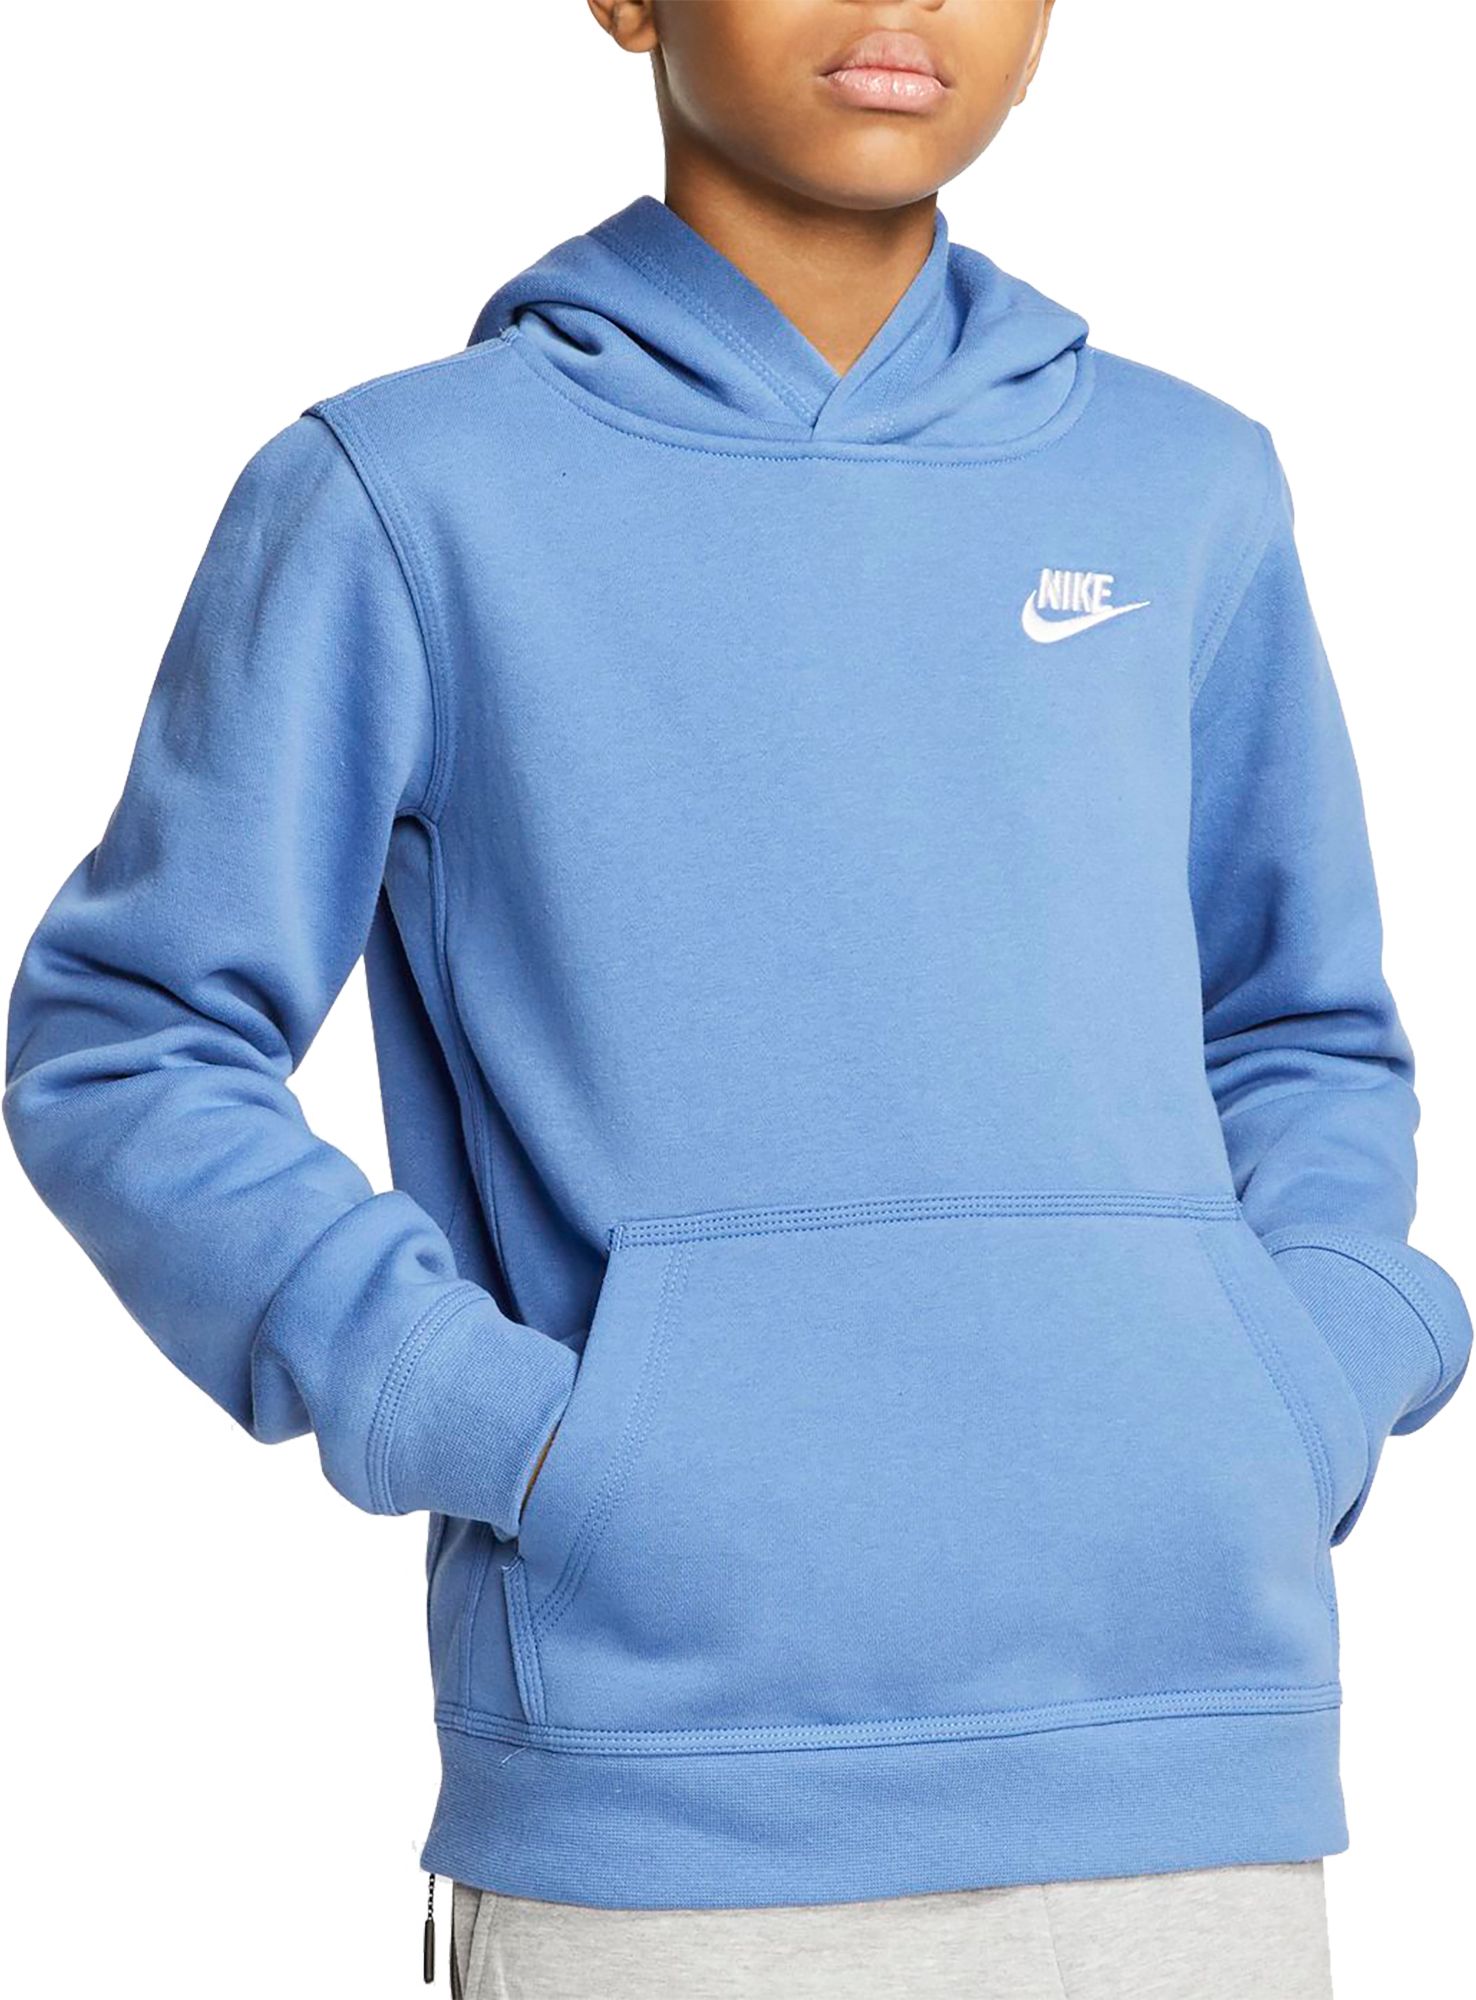 plain blue nike hoodie